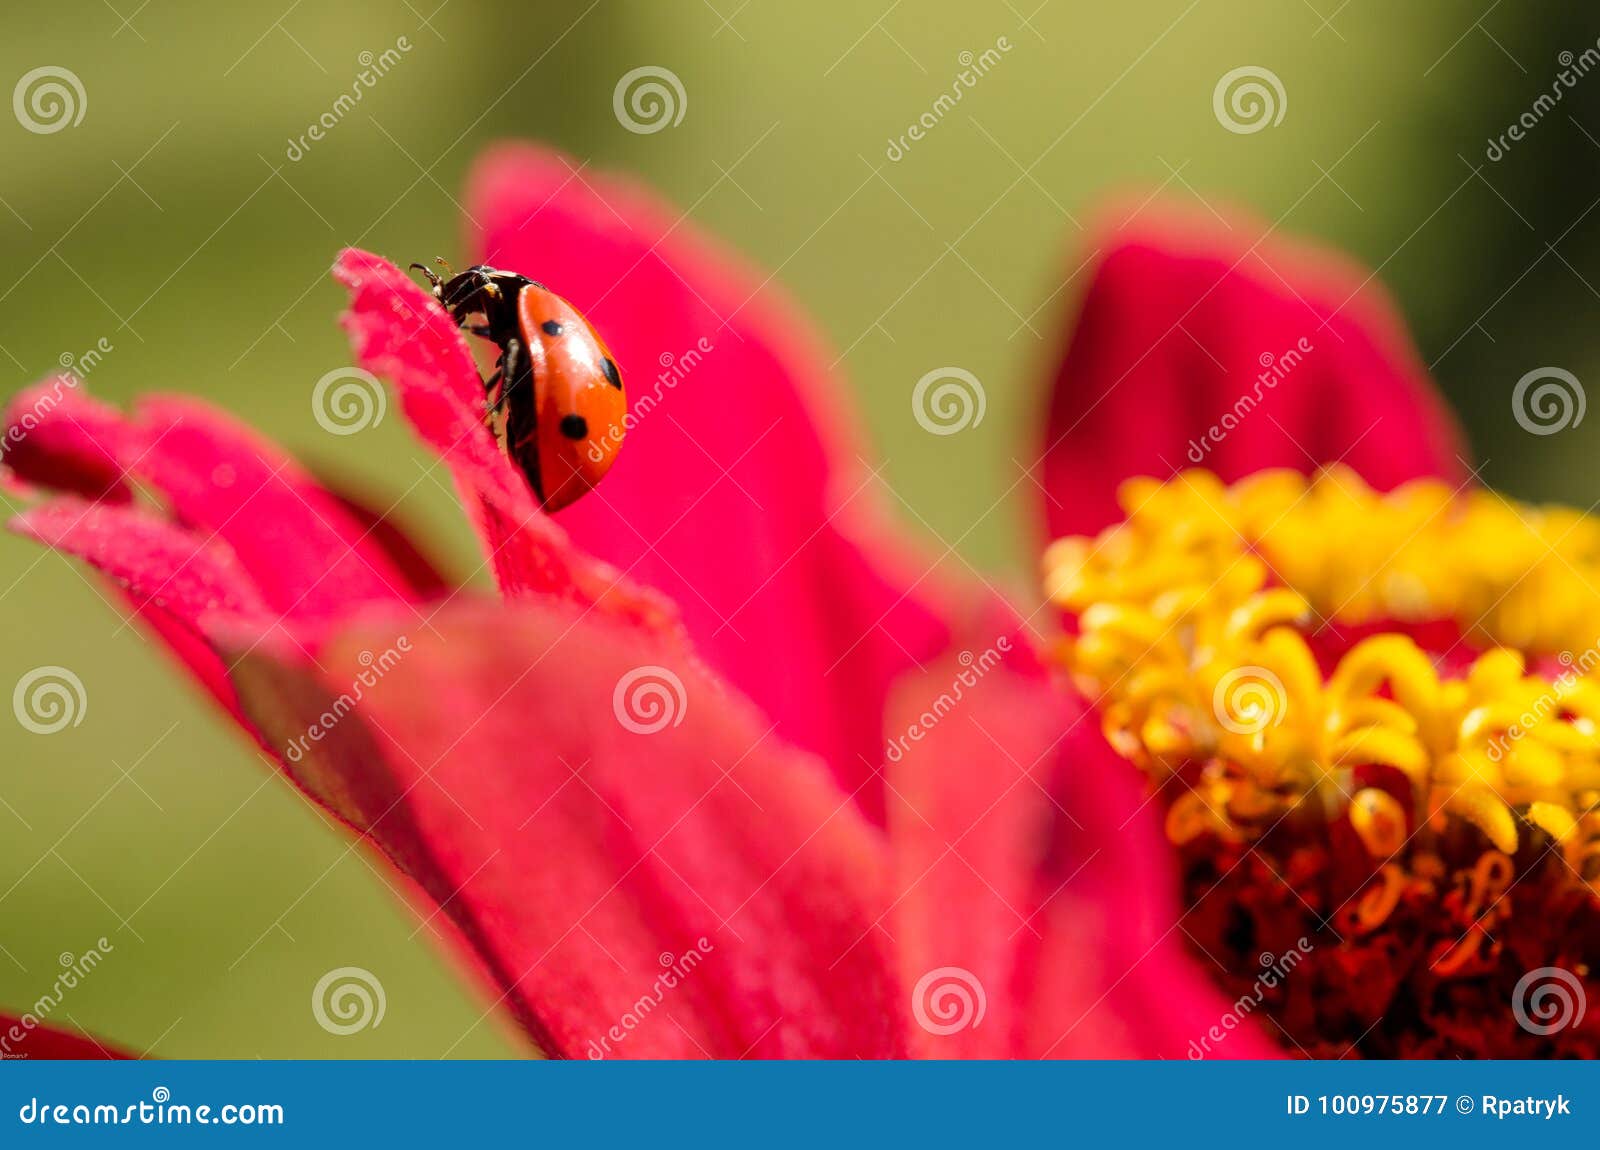 Ladybug Stock Image Image Of Focused Ladybug Pink 100975877 